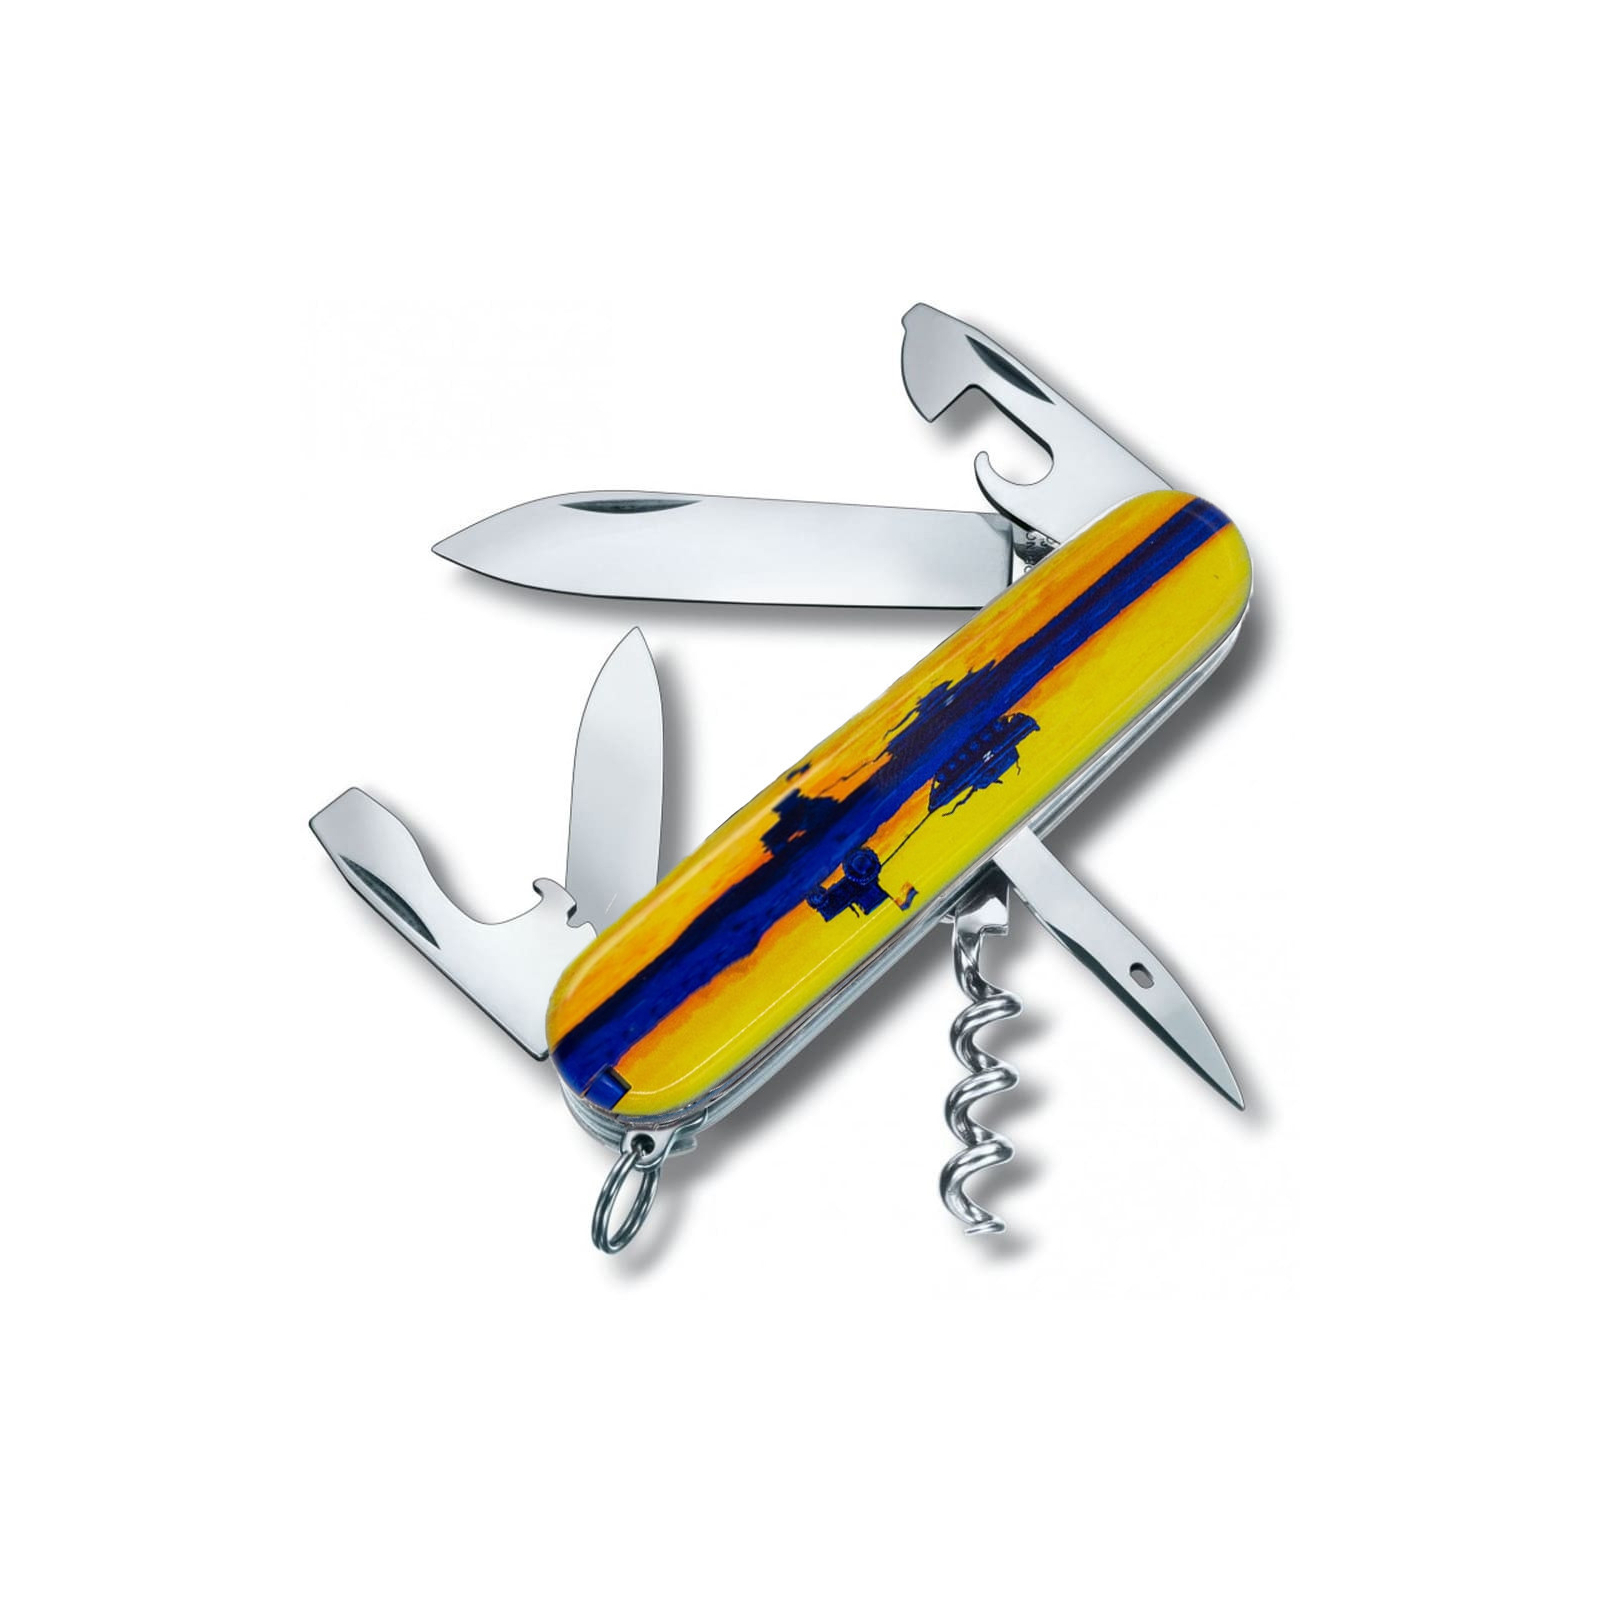 Нож Victorinox Spartan Ukraine 91 мм Жовто-синій малюнок (1.3603.7_T3100p) изображение 2